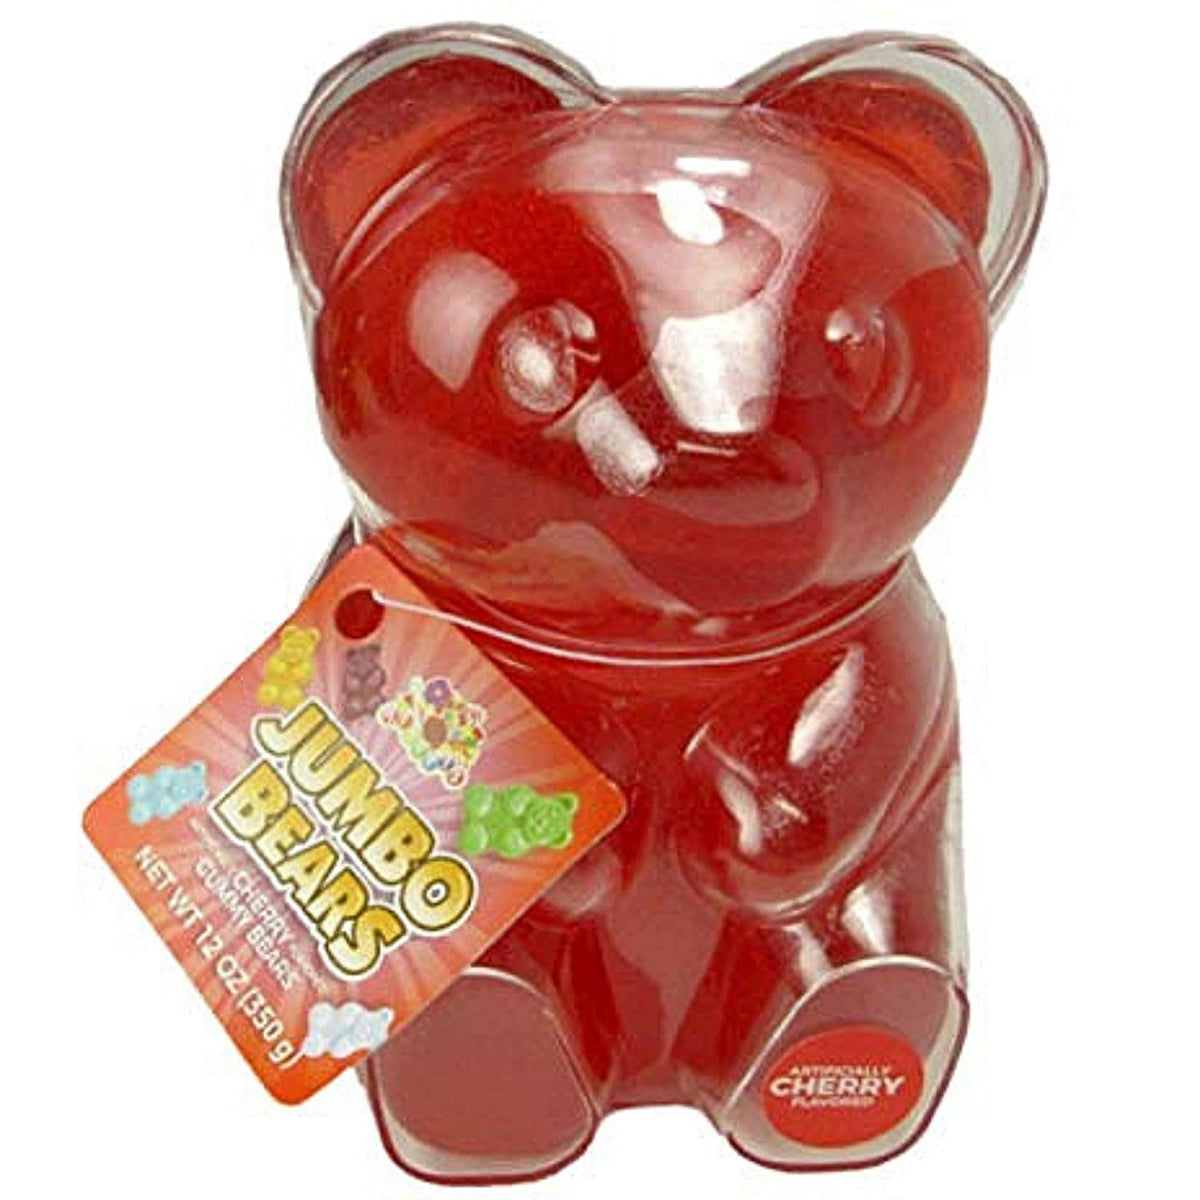 Front view of cherry Jumbo Gummy Bear.